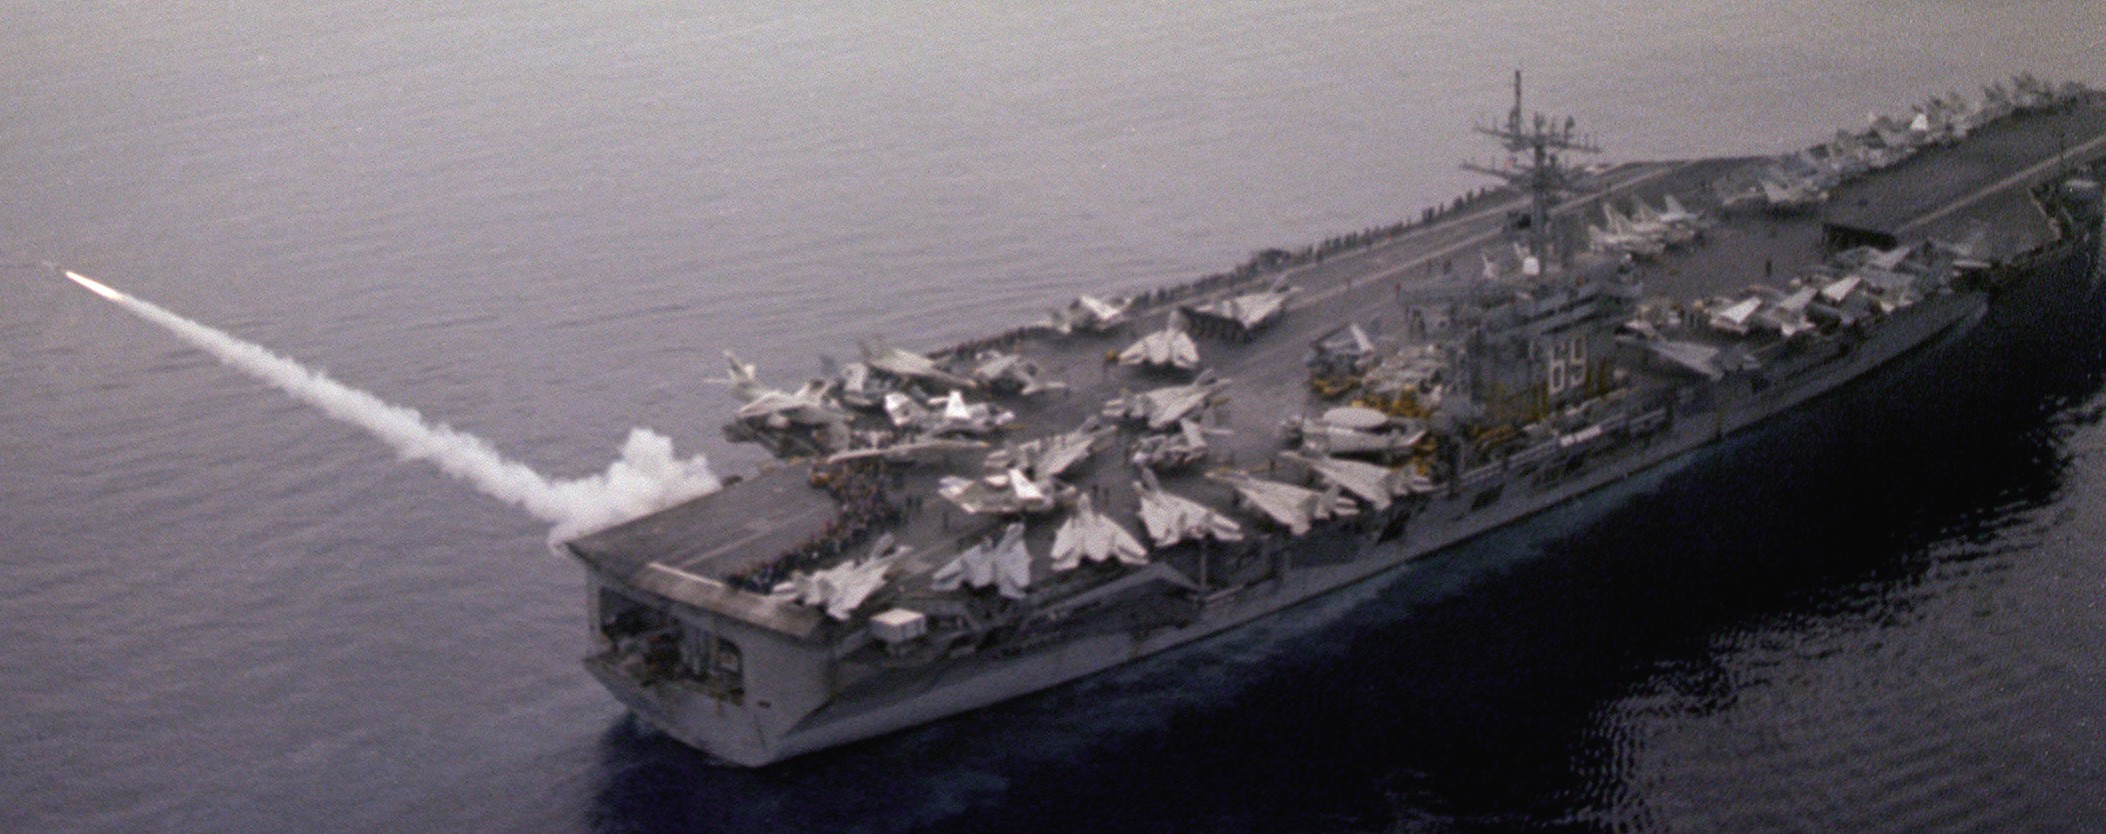 cvn-69 uss dwight d. eisenhower aircraft carrier us navy 237 rim-7 sea sparrow sam missile